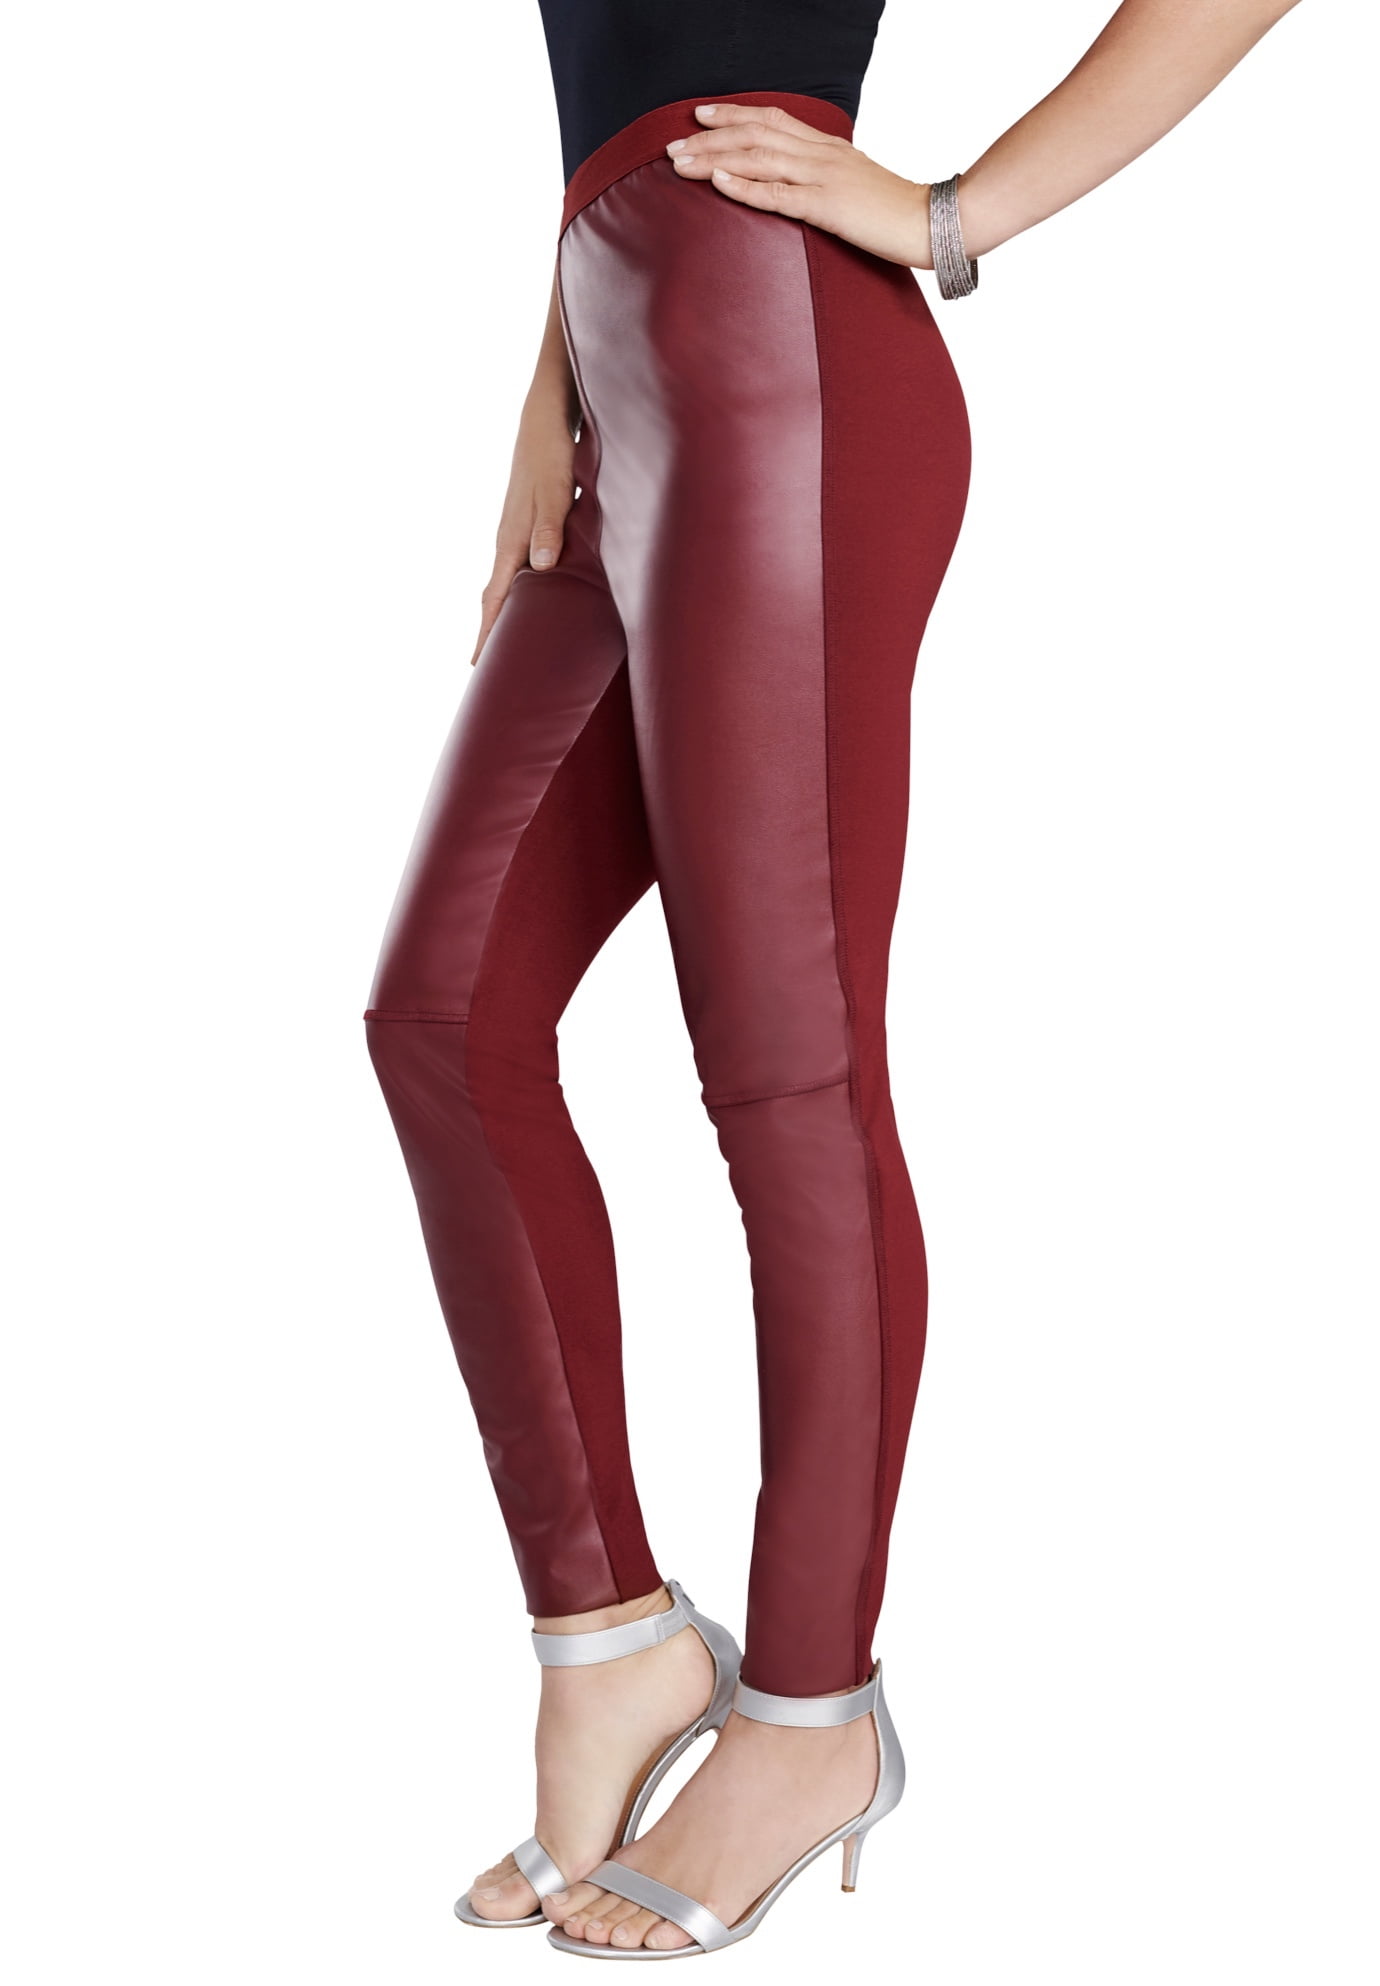 Roaman's Women's Plus Size Faux-Leather Legging Vegan Leather Stretch Pants